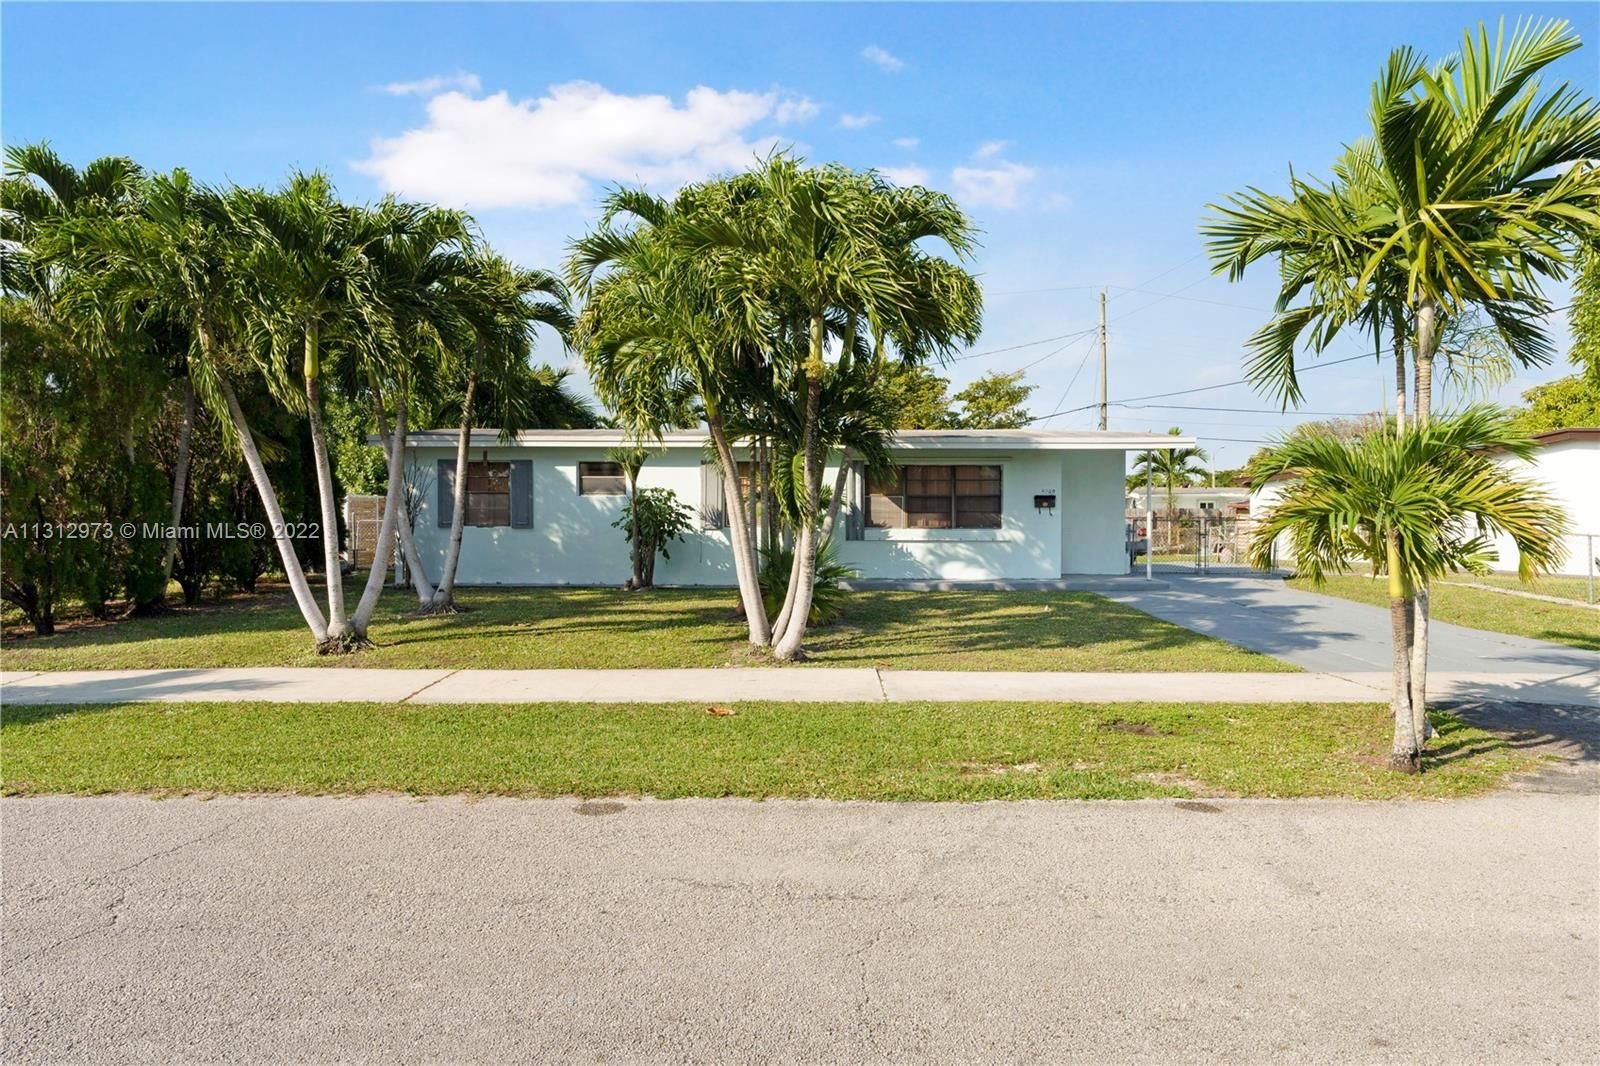 Real estate property located at 5020 112th Pl, Miami-Dade County, Miami, FL